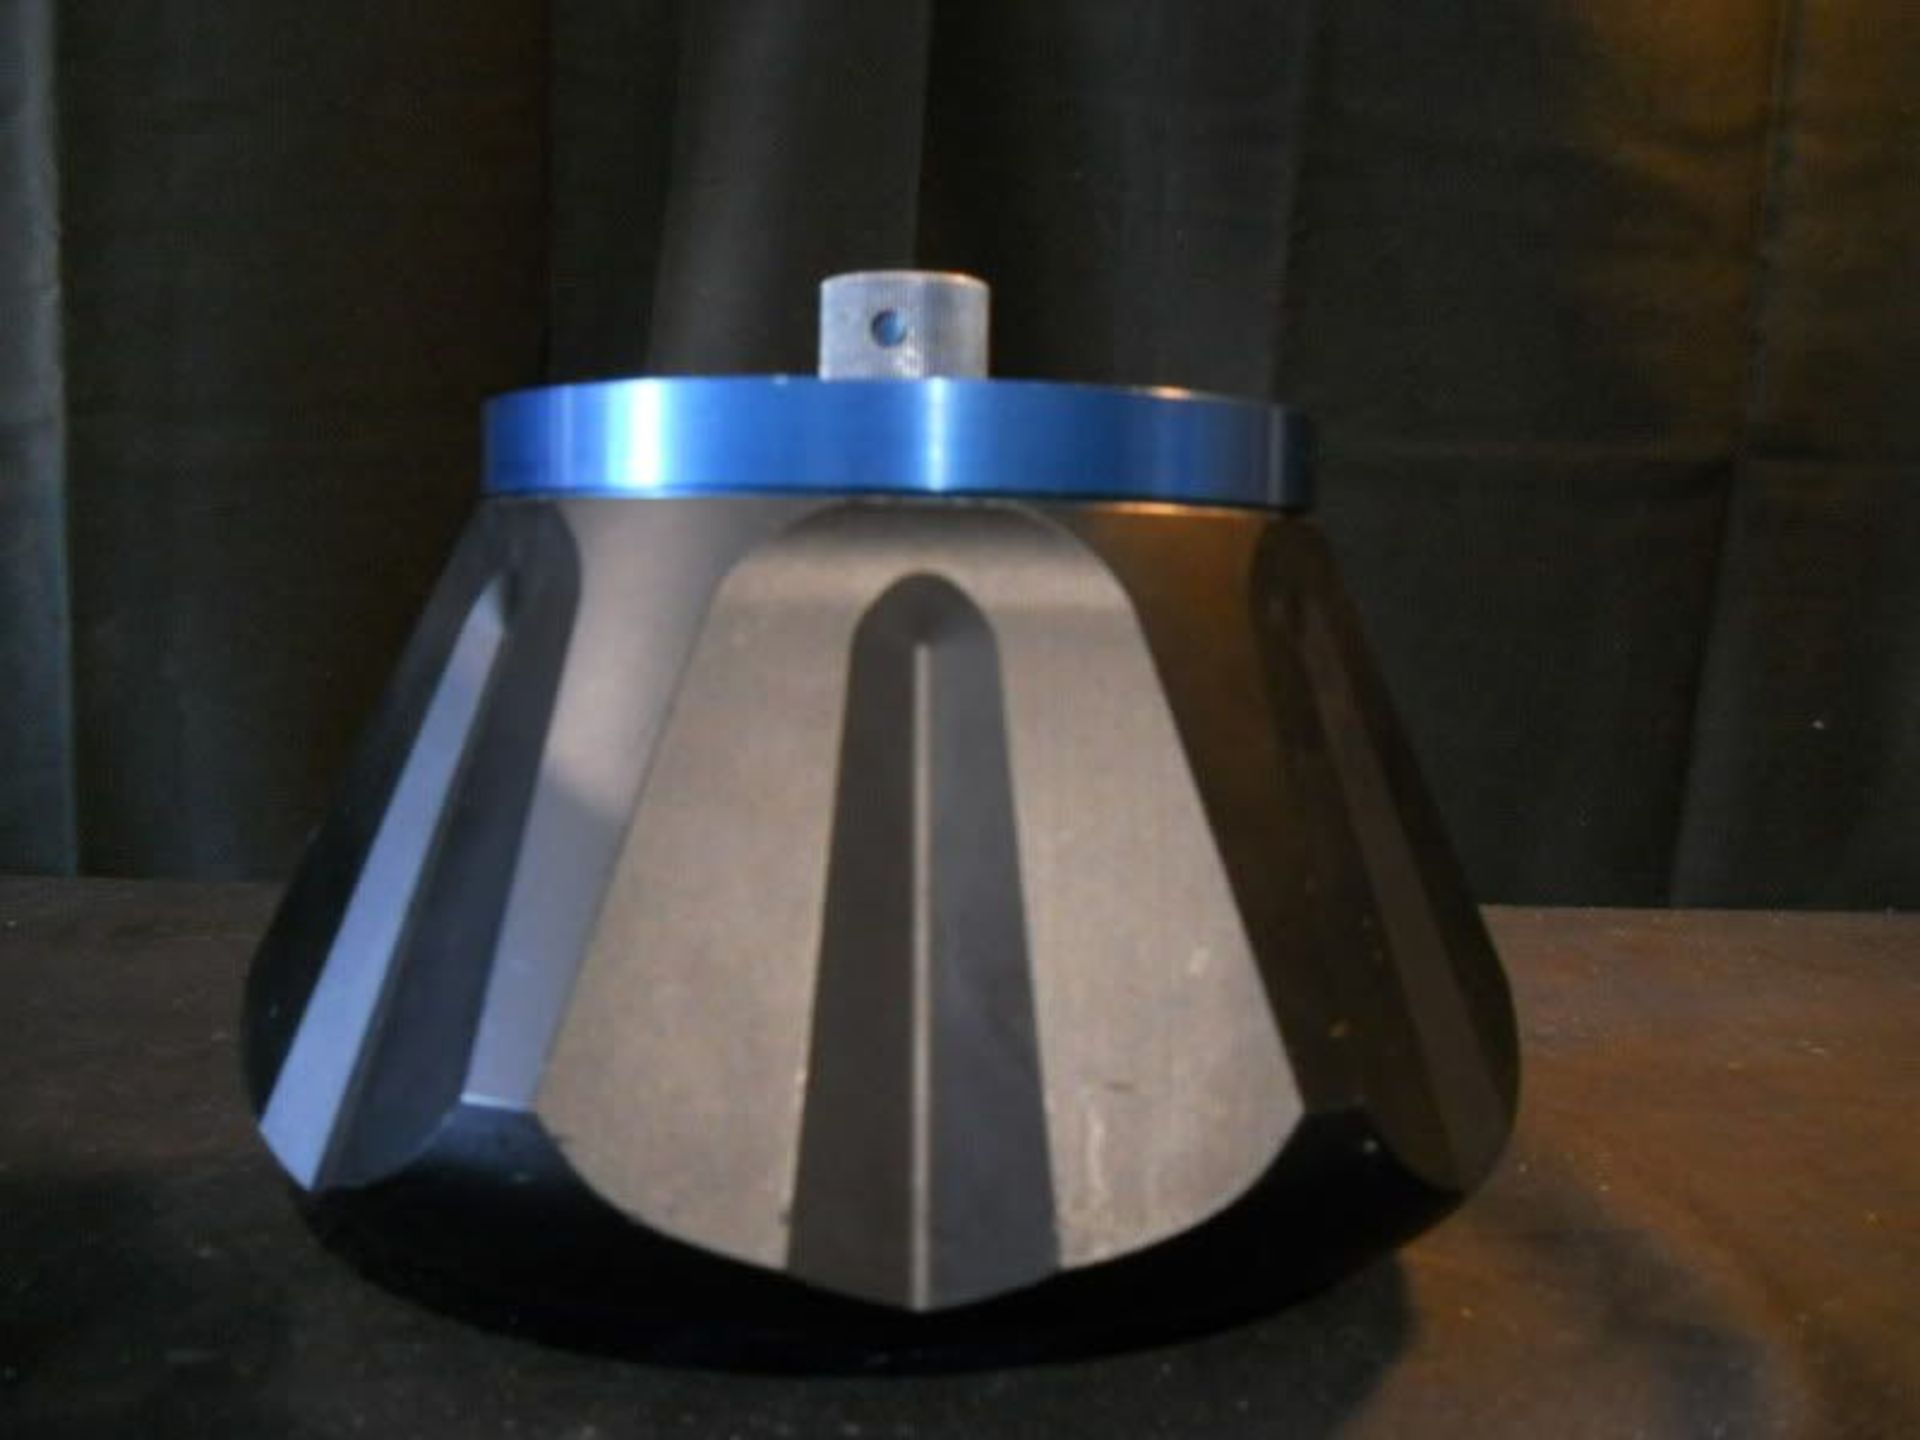 Sorvall Instruments Du Pont 6 Place UltraCentrifuge Rotor Model T647.5, Qty 1, 221154466237